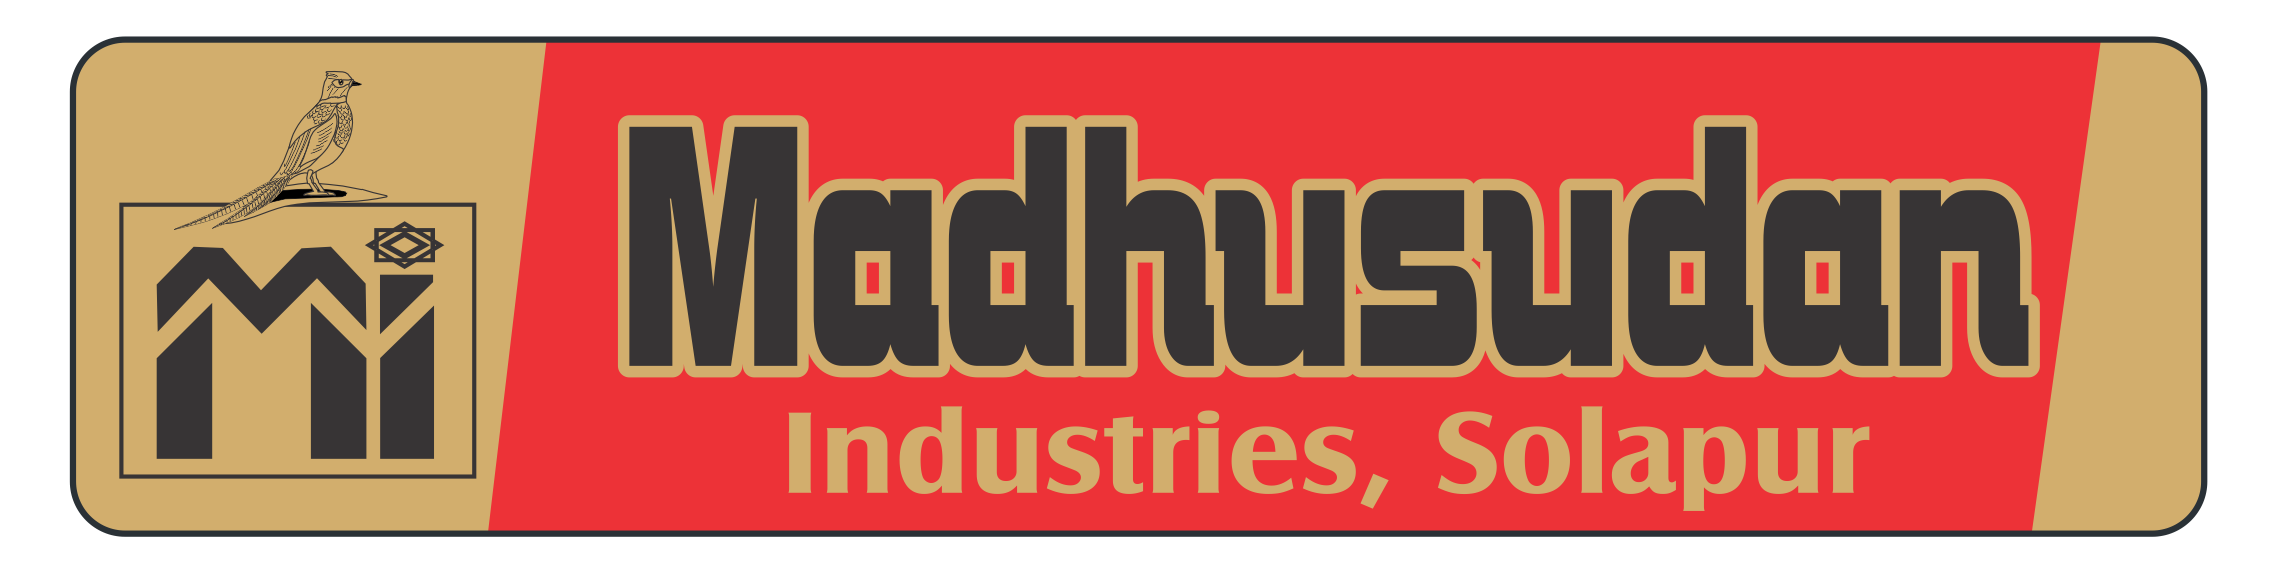 Madhusudan Industries Logo